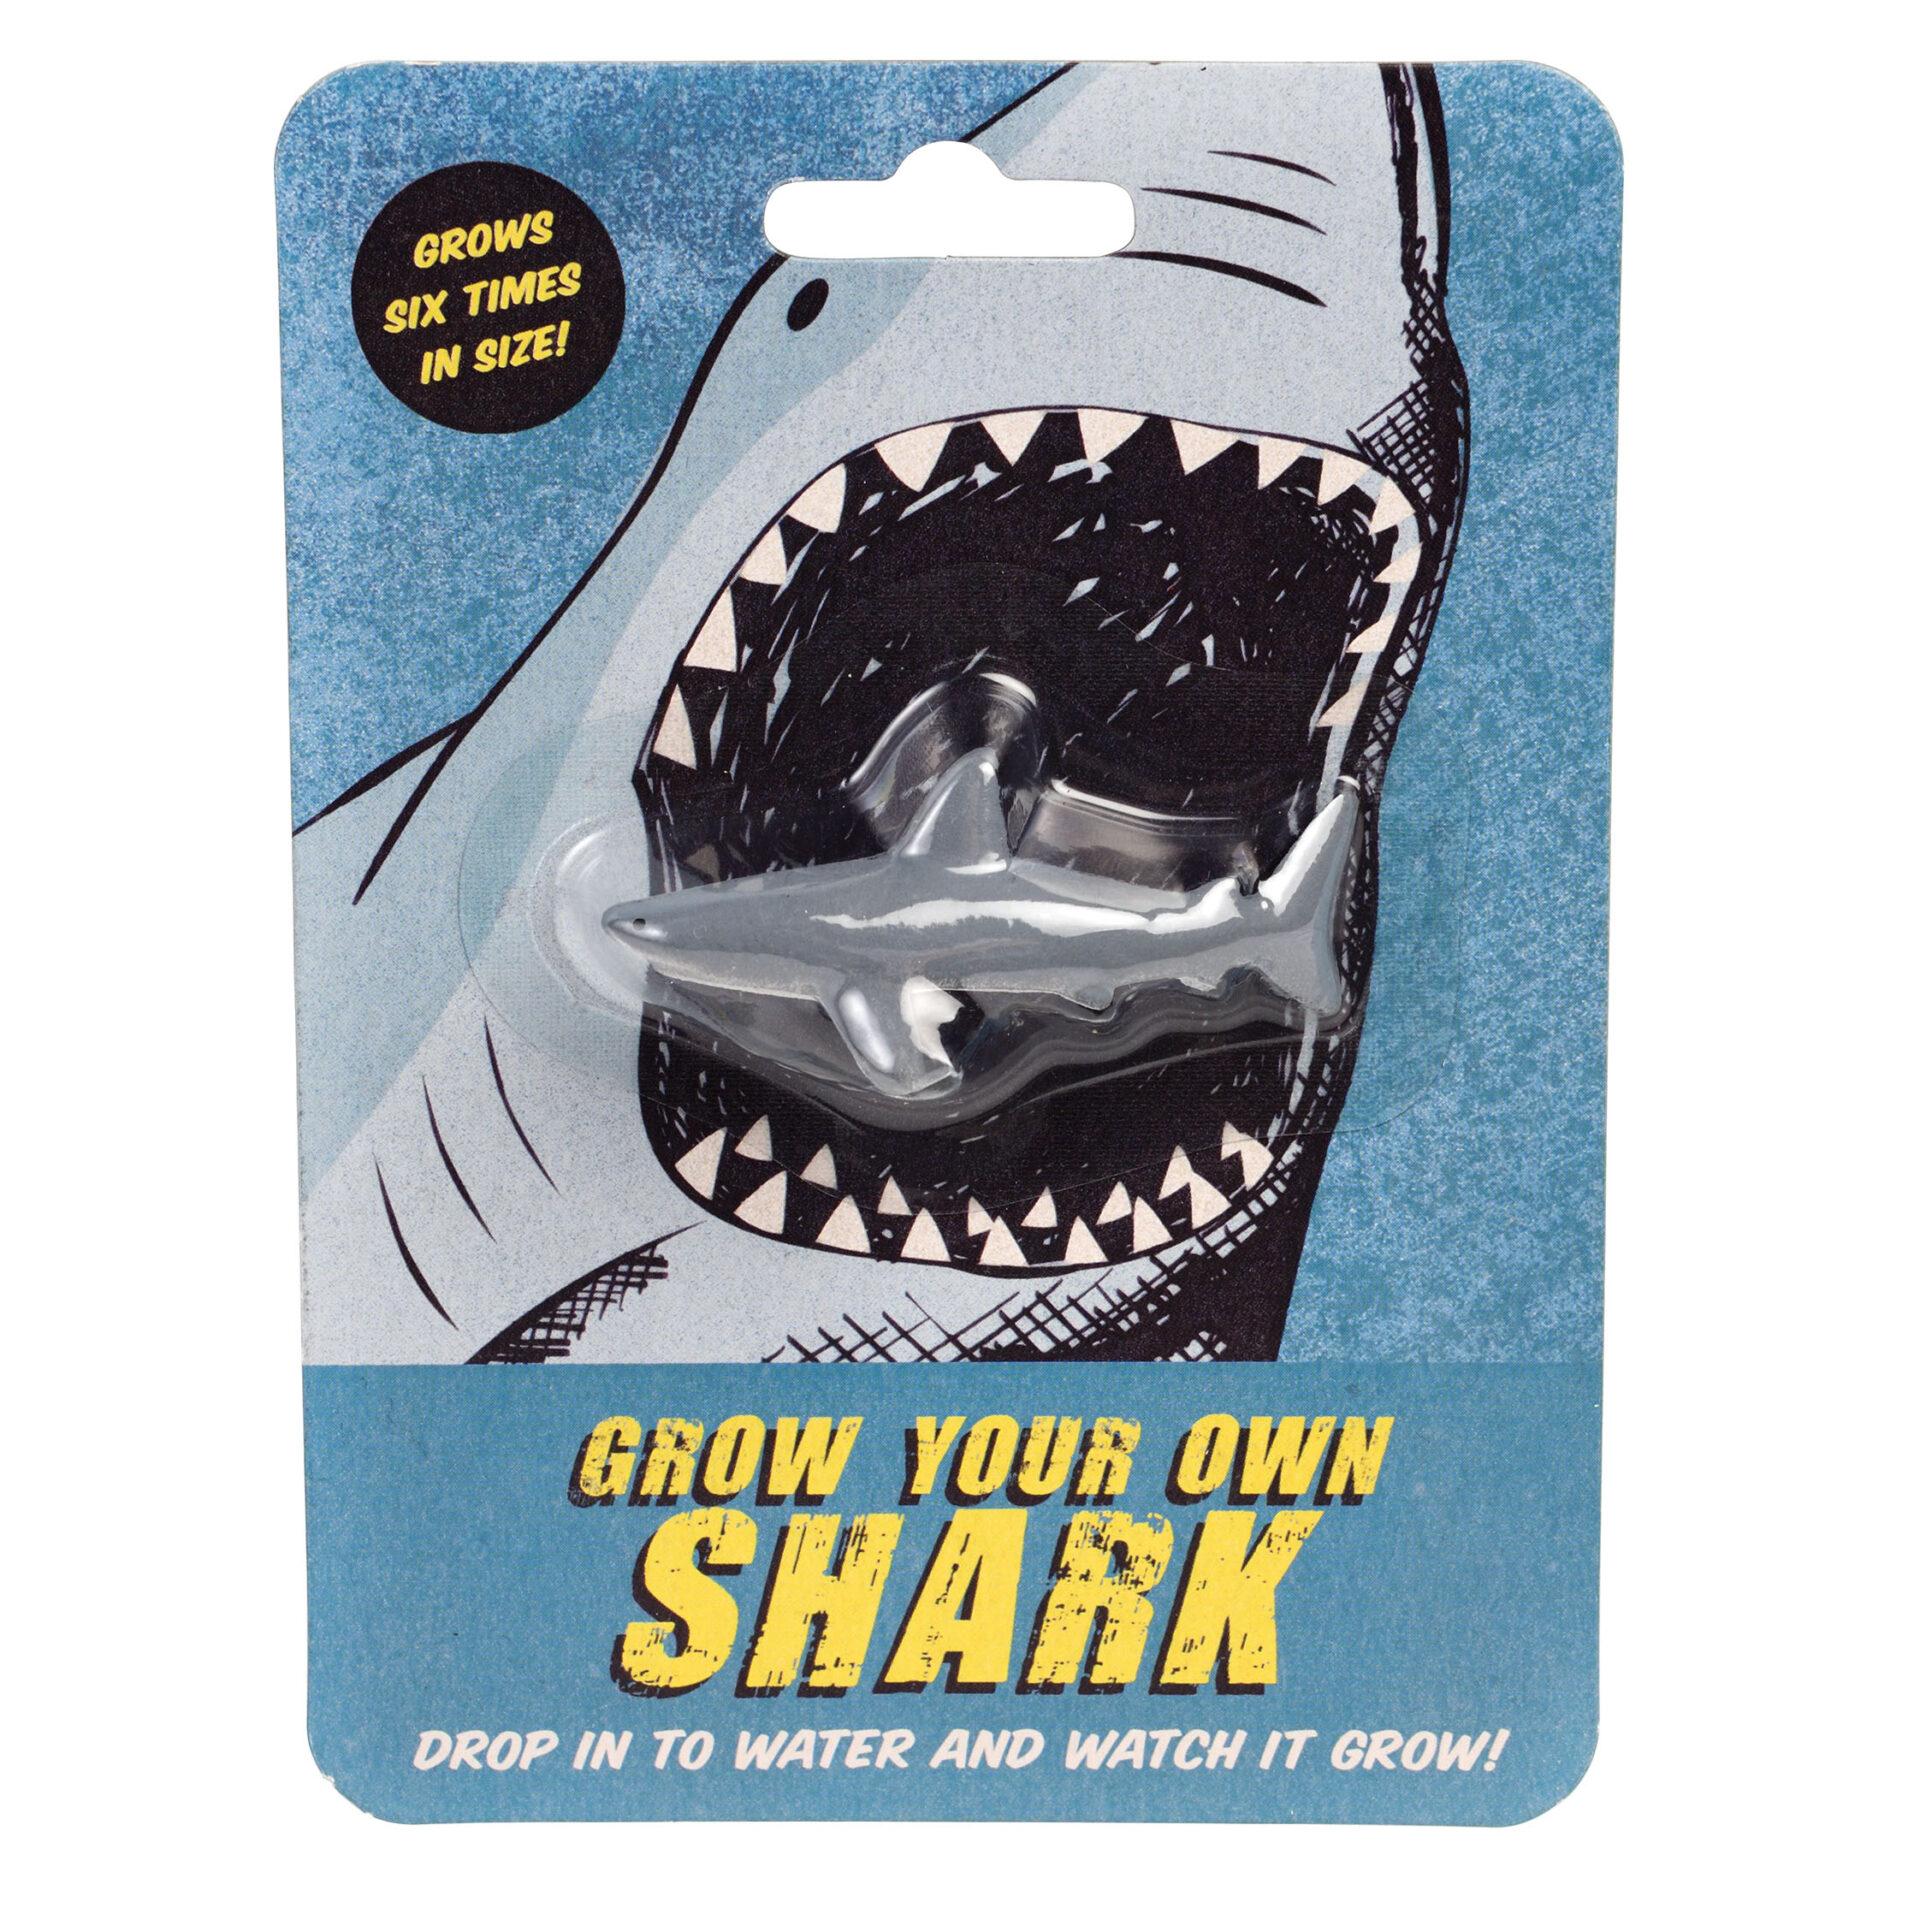 Grow your own shark by rex london